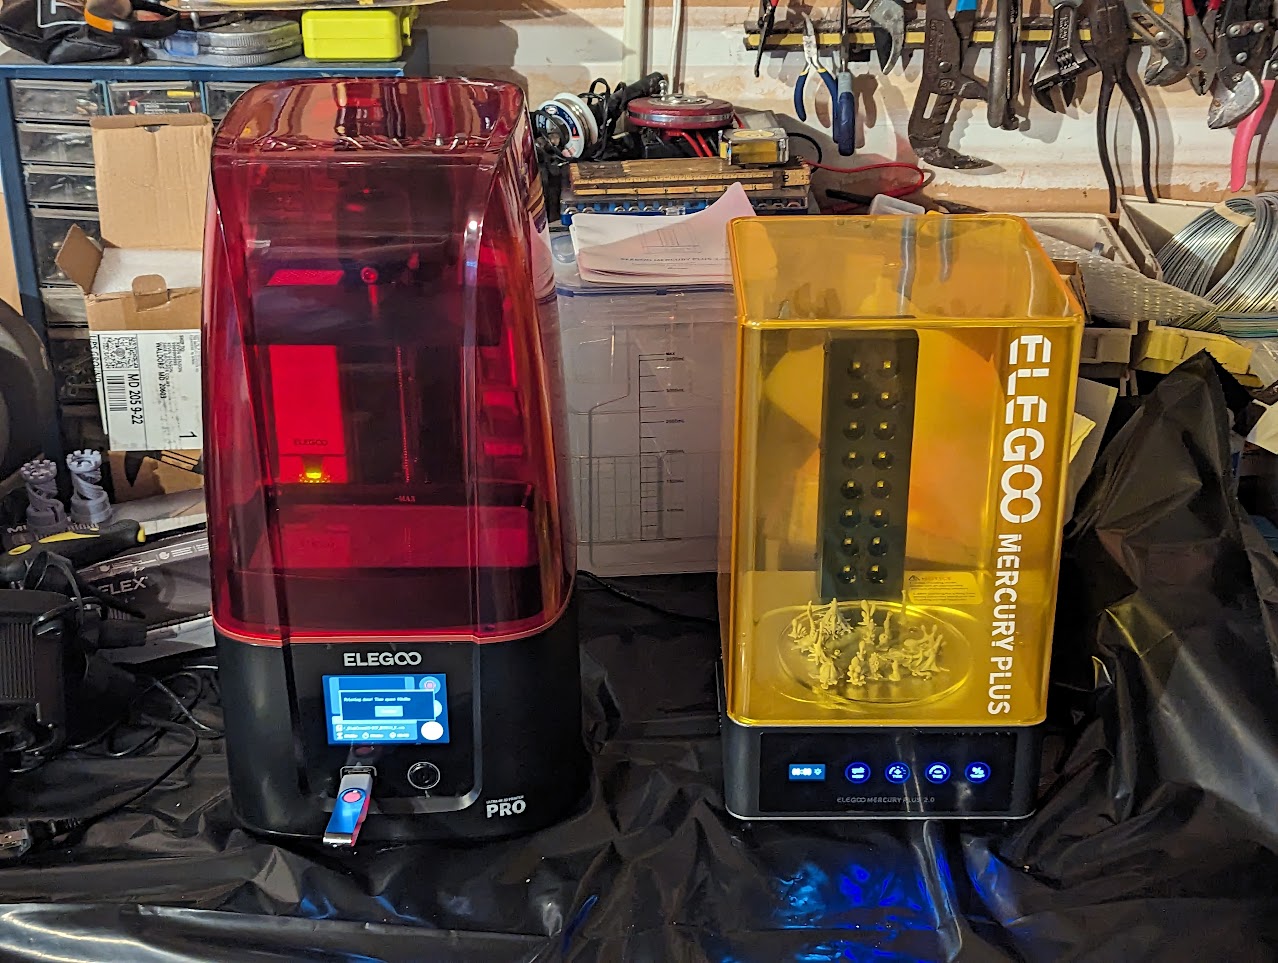 Elegoo Mars 3 Pro Resin Printer Review: Elegoo's Latest Small